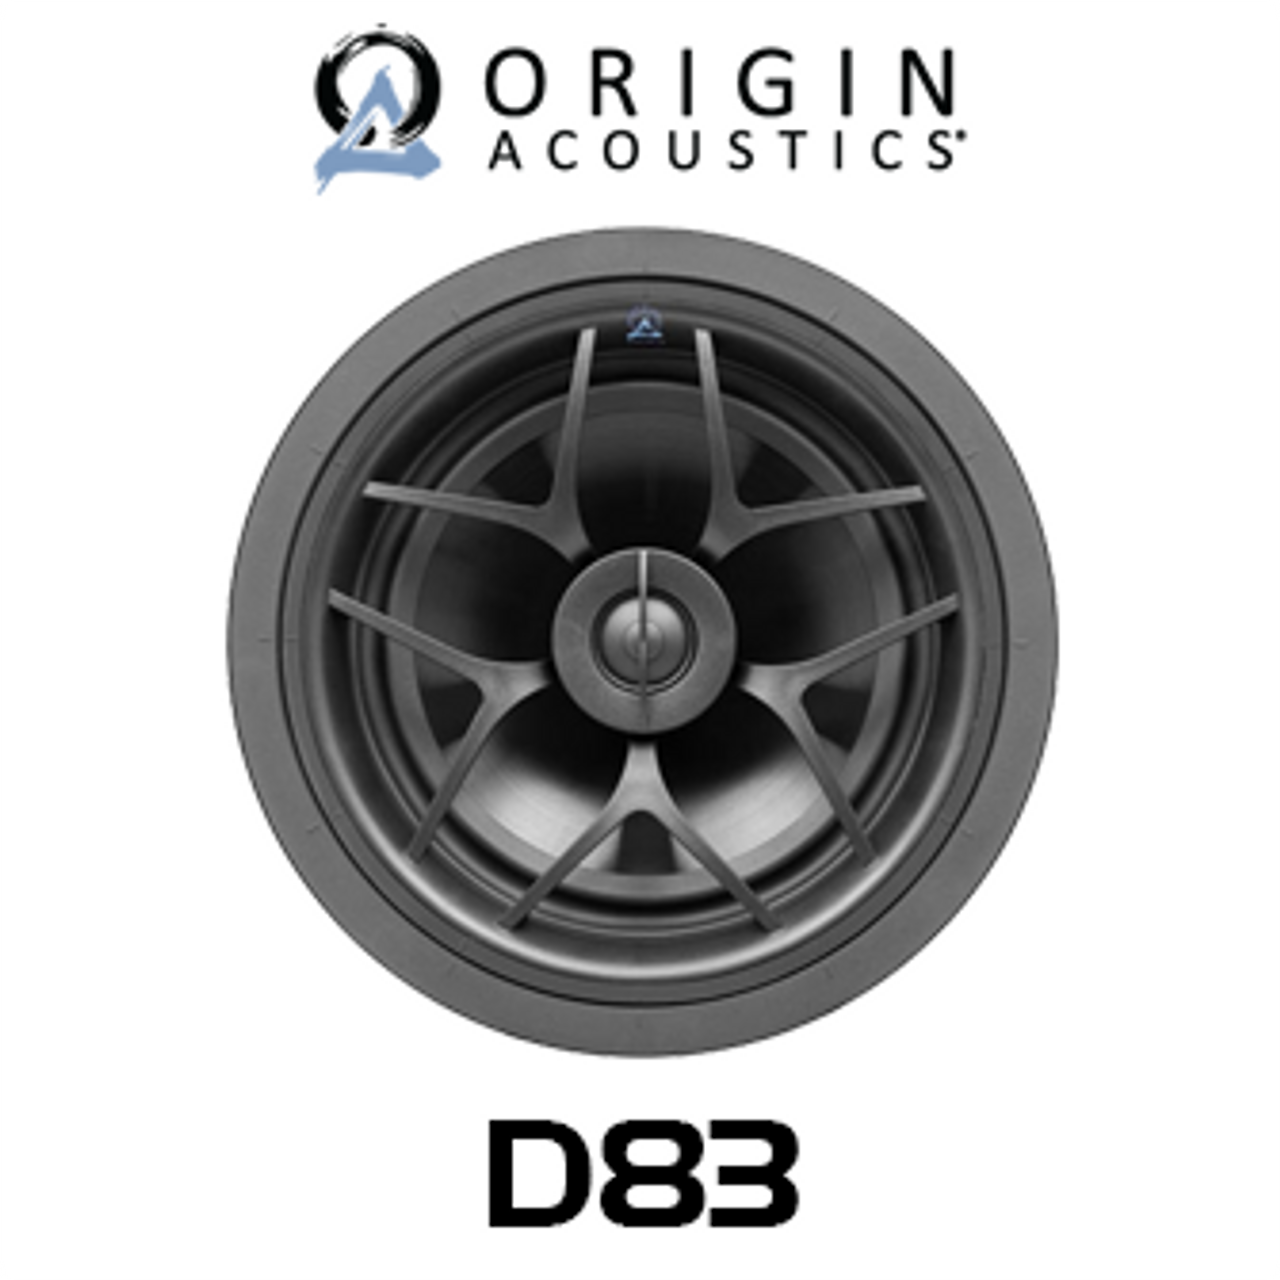 Origin Acoustics Director D83 8" IMG In-Ceiling Speaker (Each)